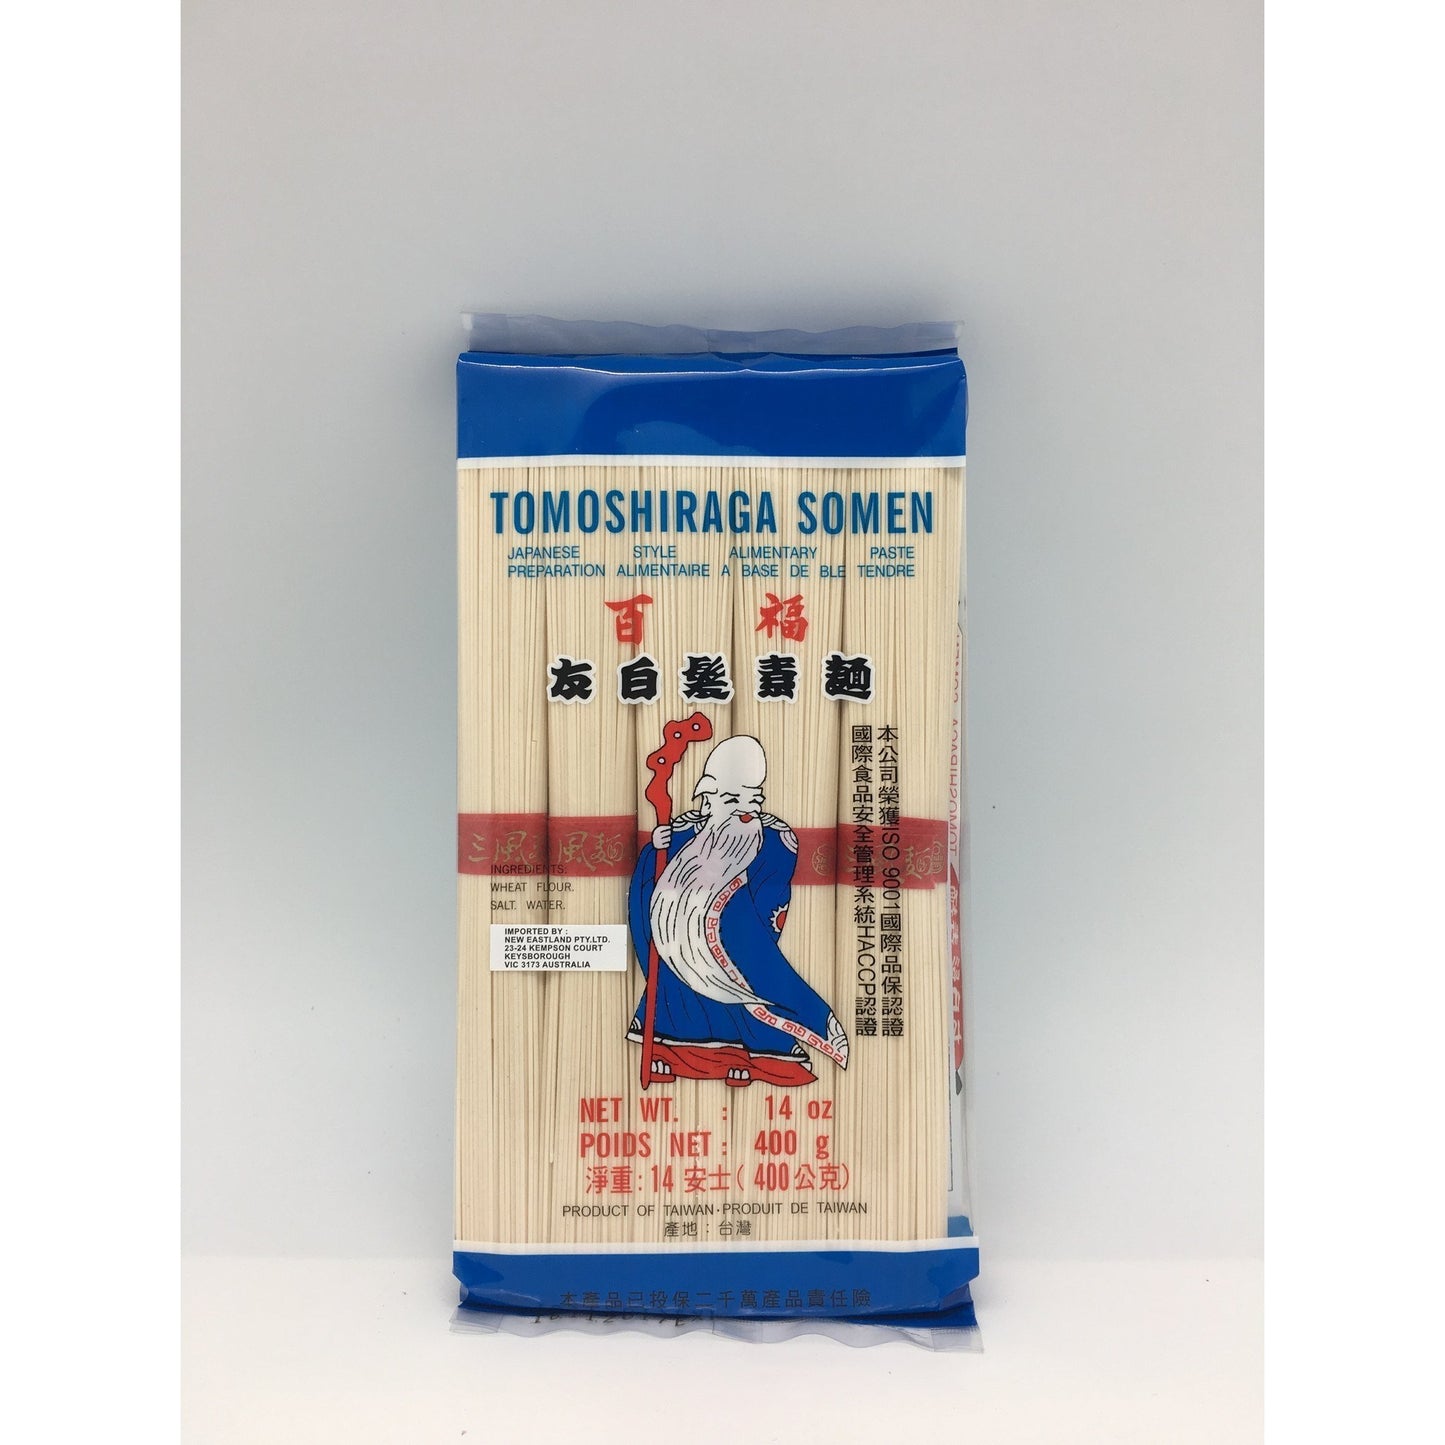 N013 Tomoshiraga Somen Brand - Dried Noodle 400g - 48 bags / 1CTN - New Eastland Pty Ltd - Asian food wholesalers